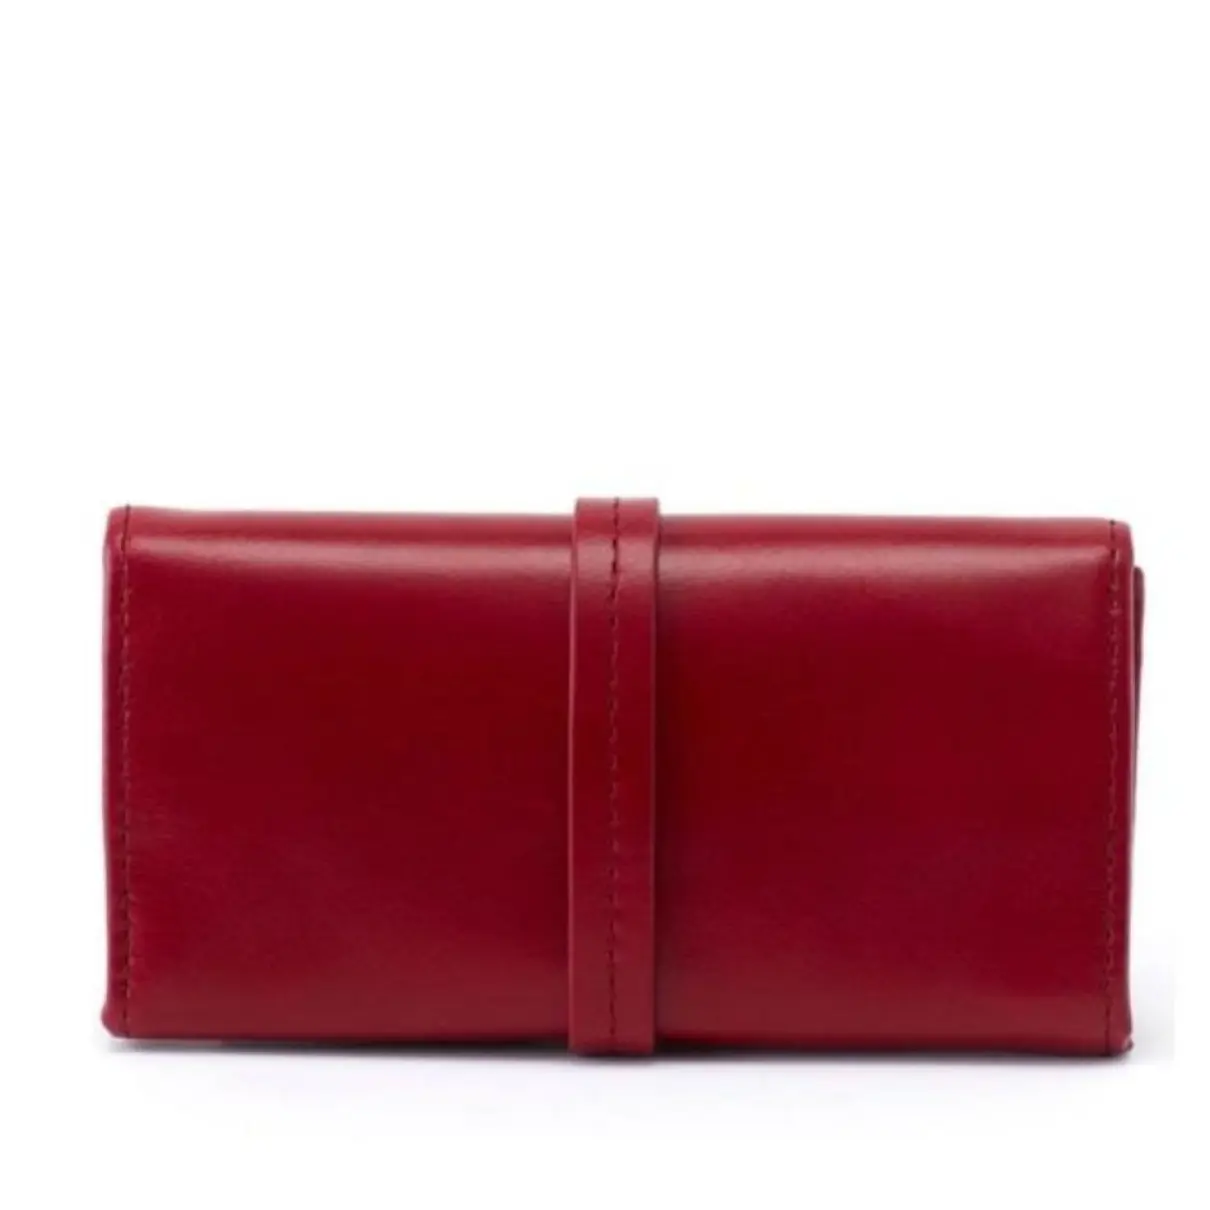 Leather wallet Hobo International